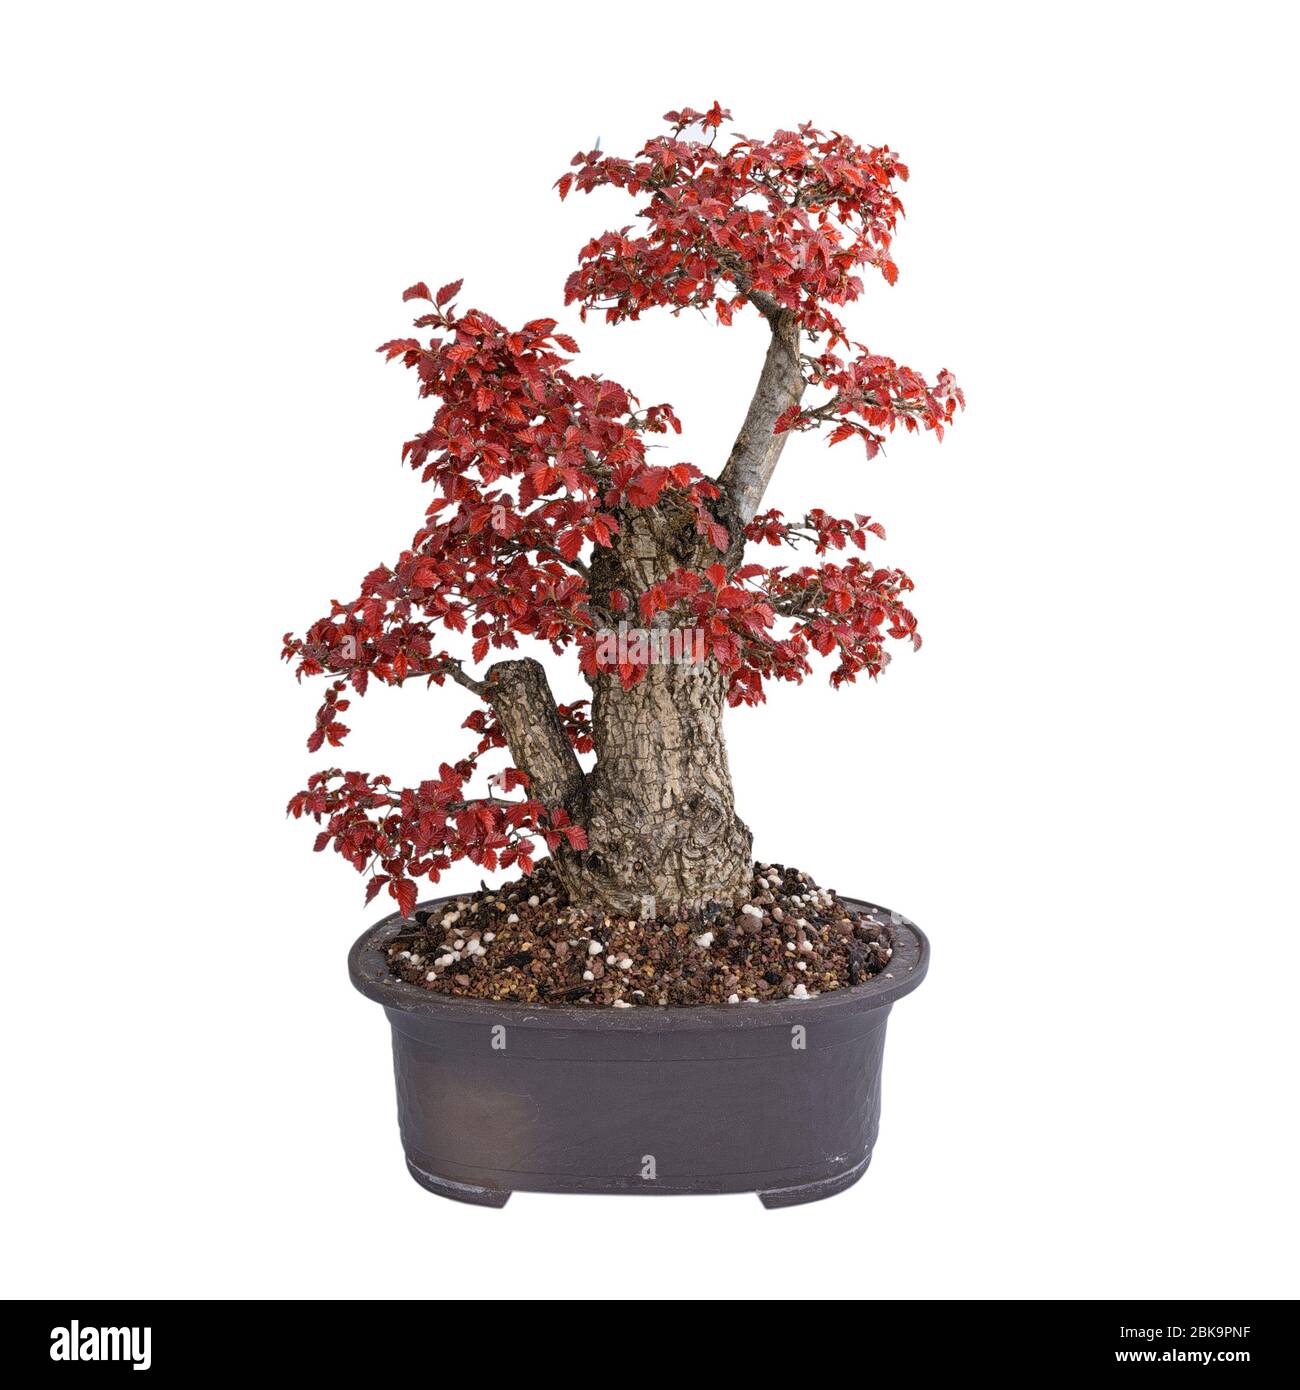 field elm yamadori bonsai in autumn colors, isolated over white background (Ulmus procera) Stock Photo